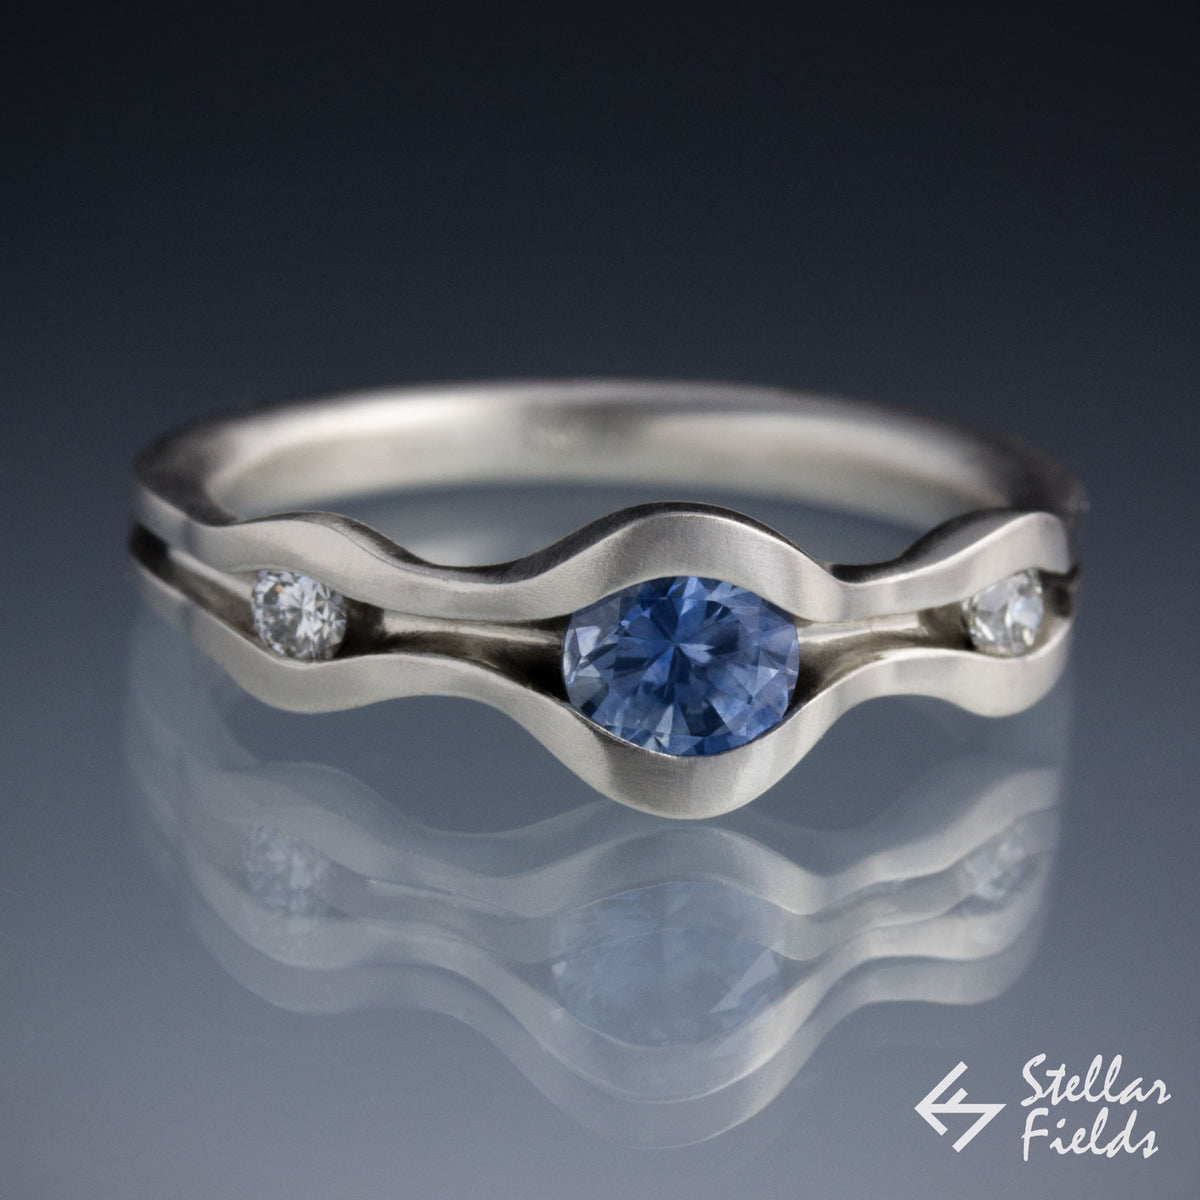 Blue Sapphire Engagement Ring 14k White Gold Platinum Stellar Fields Jewelry